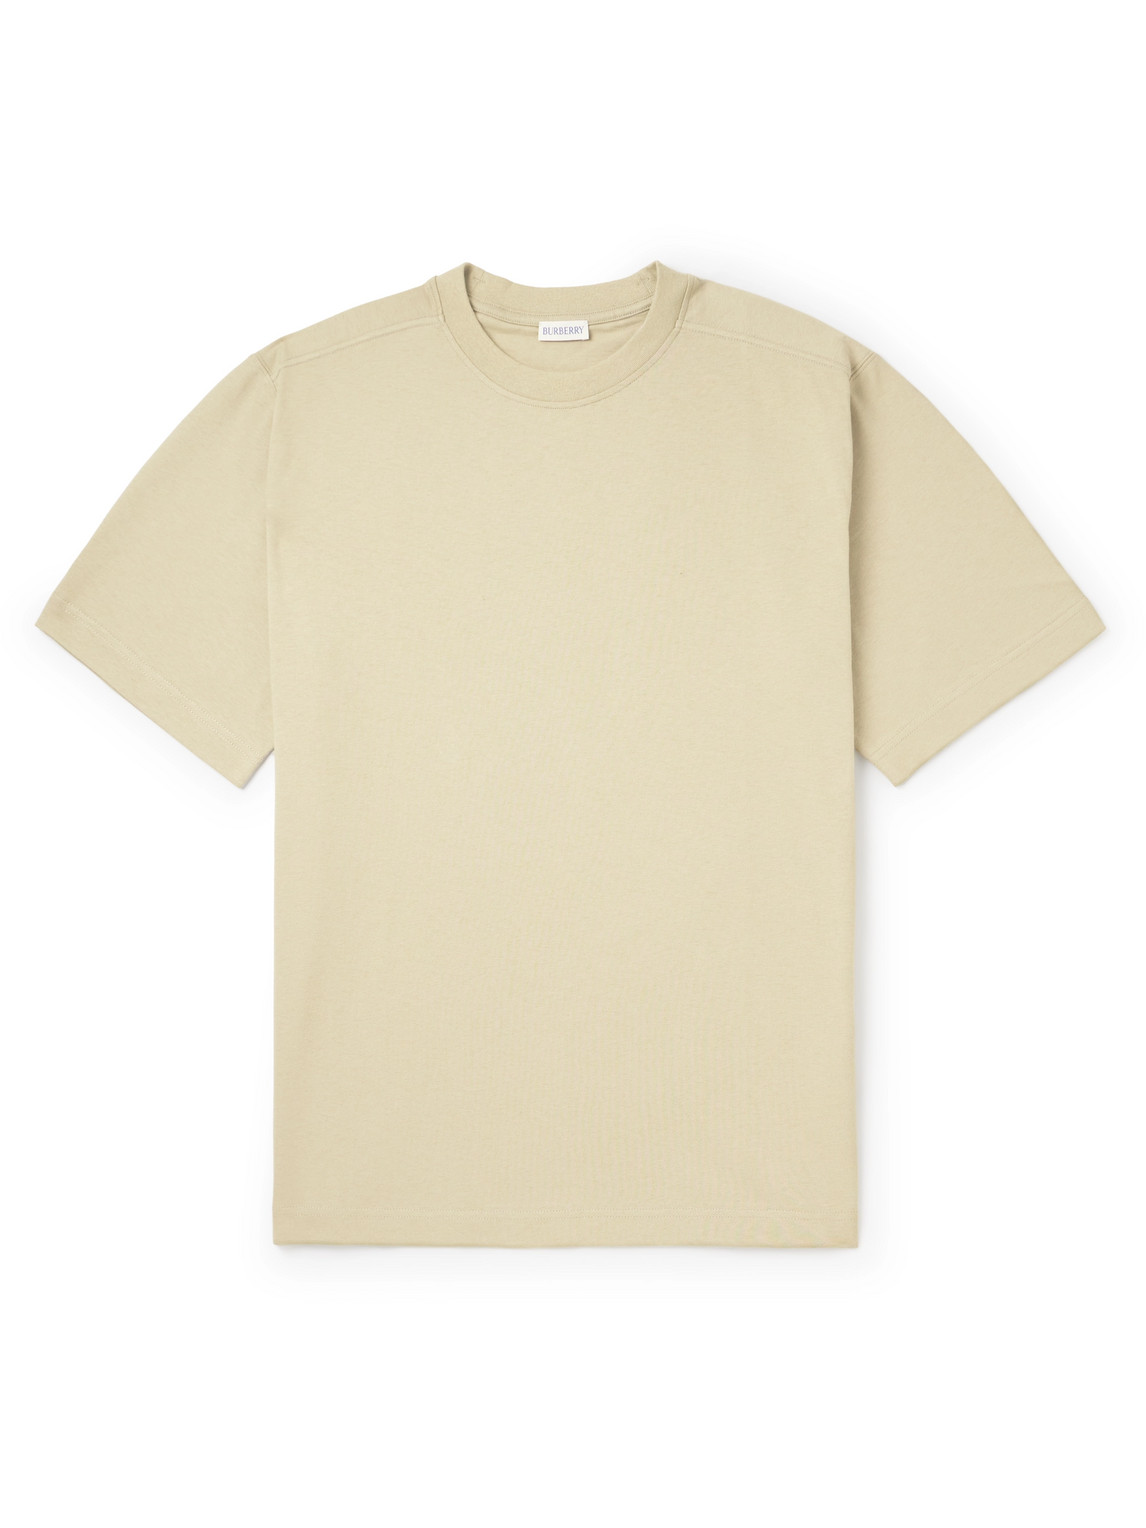 Burberry - Logo-Embroidered Cotton-Jersey T-Shirt - Men - Neutrals - XL von Burberry